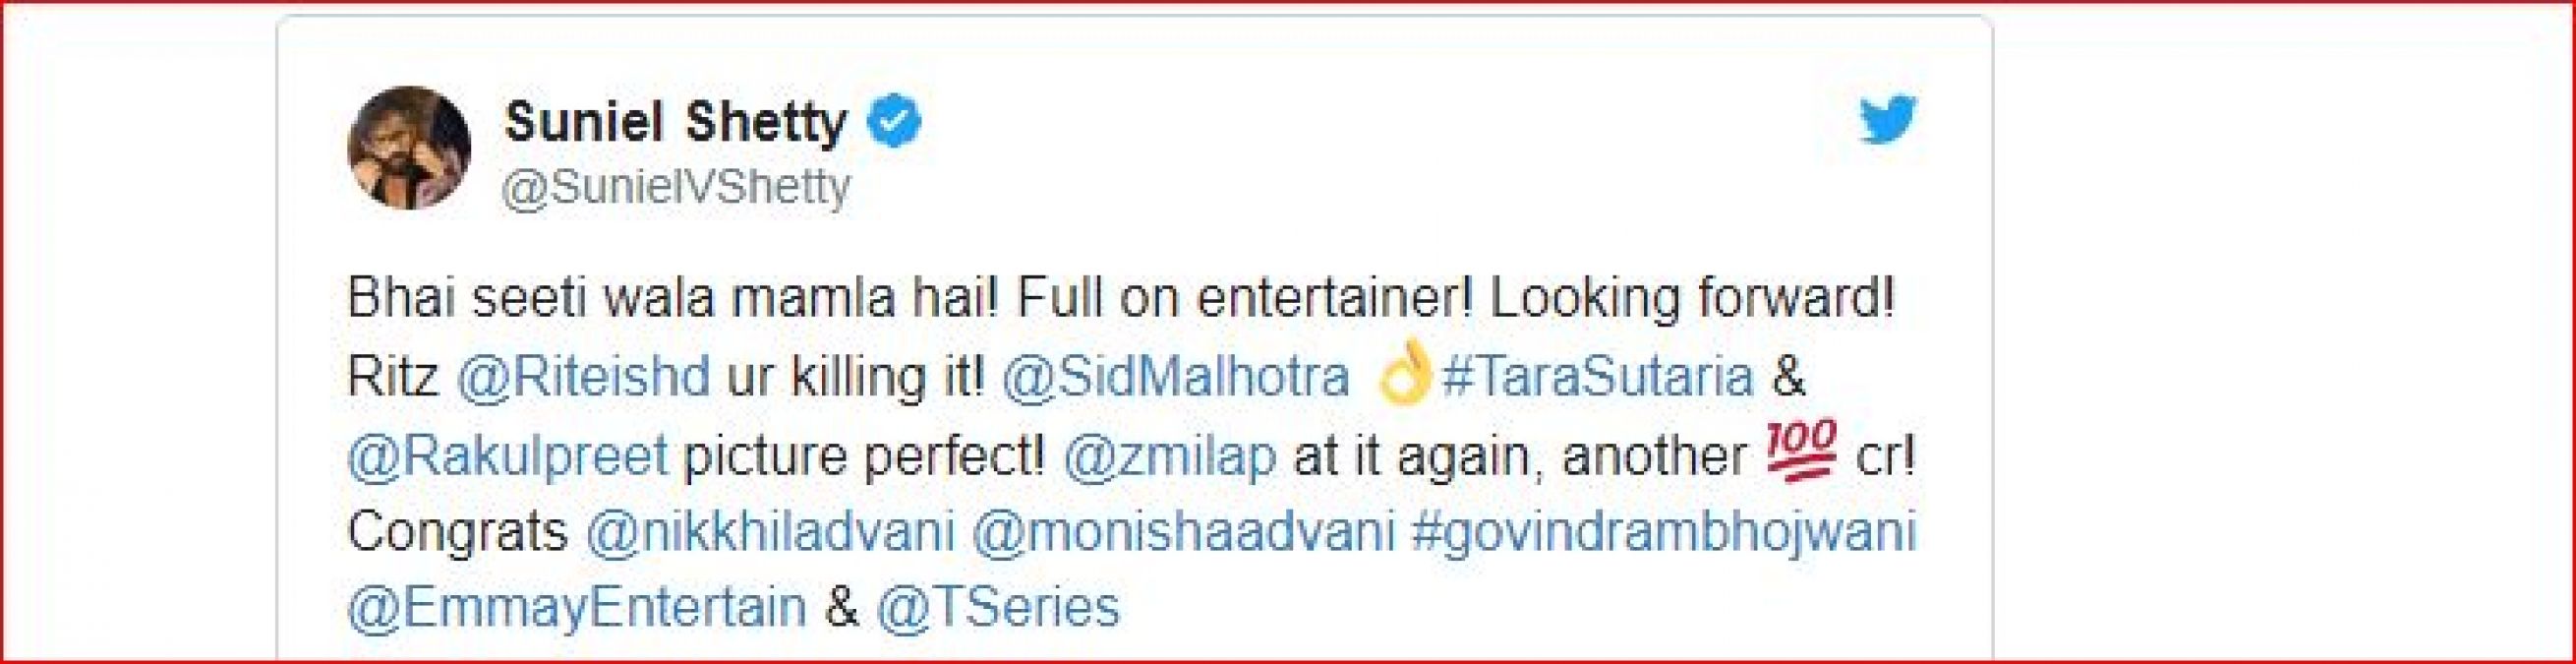 Genelia D'Souza has an adorable reaction to husband Riteish Deshmukh's 'Marjaavaan' trailer